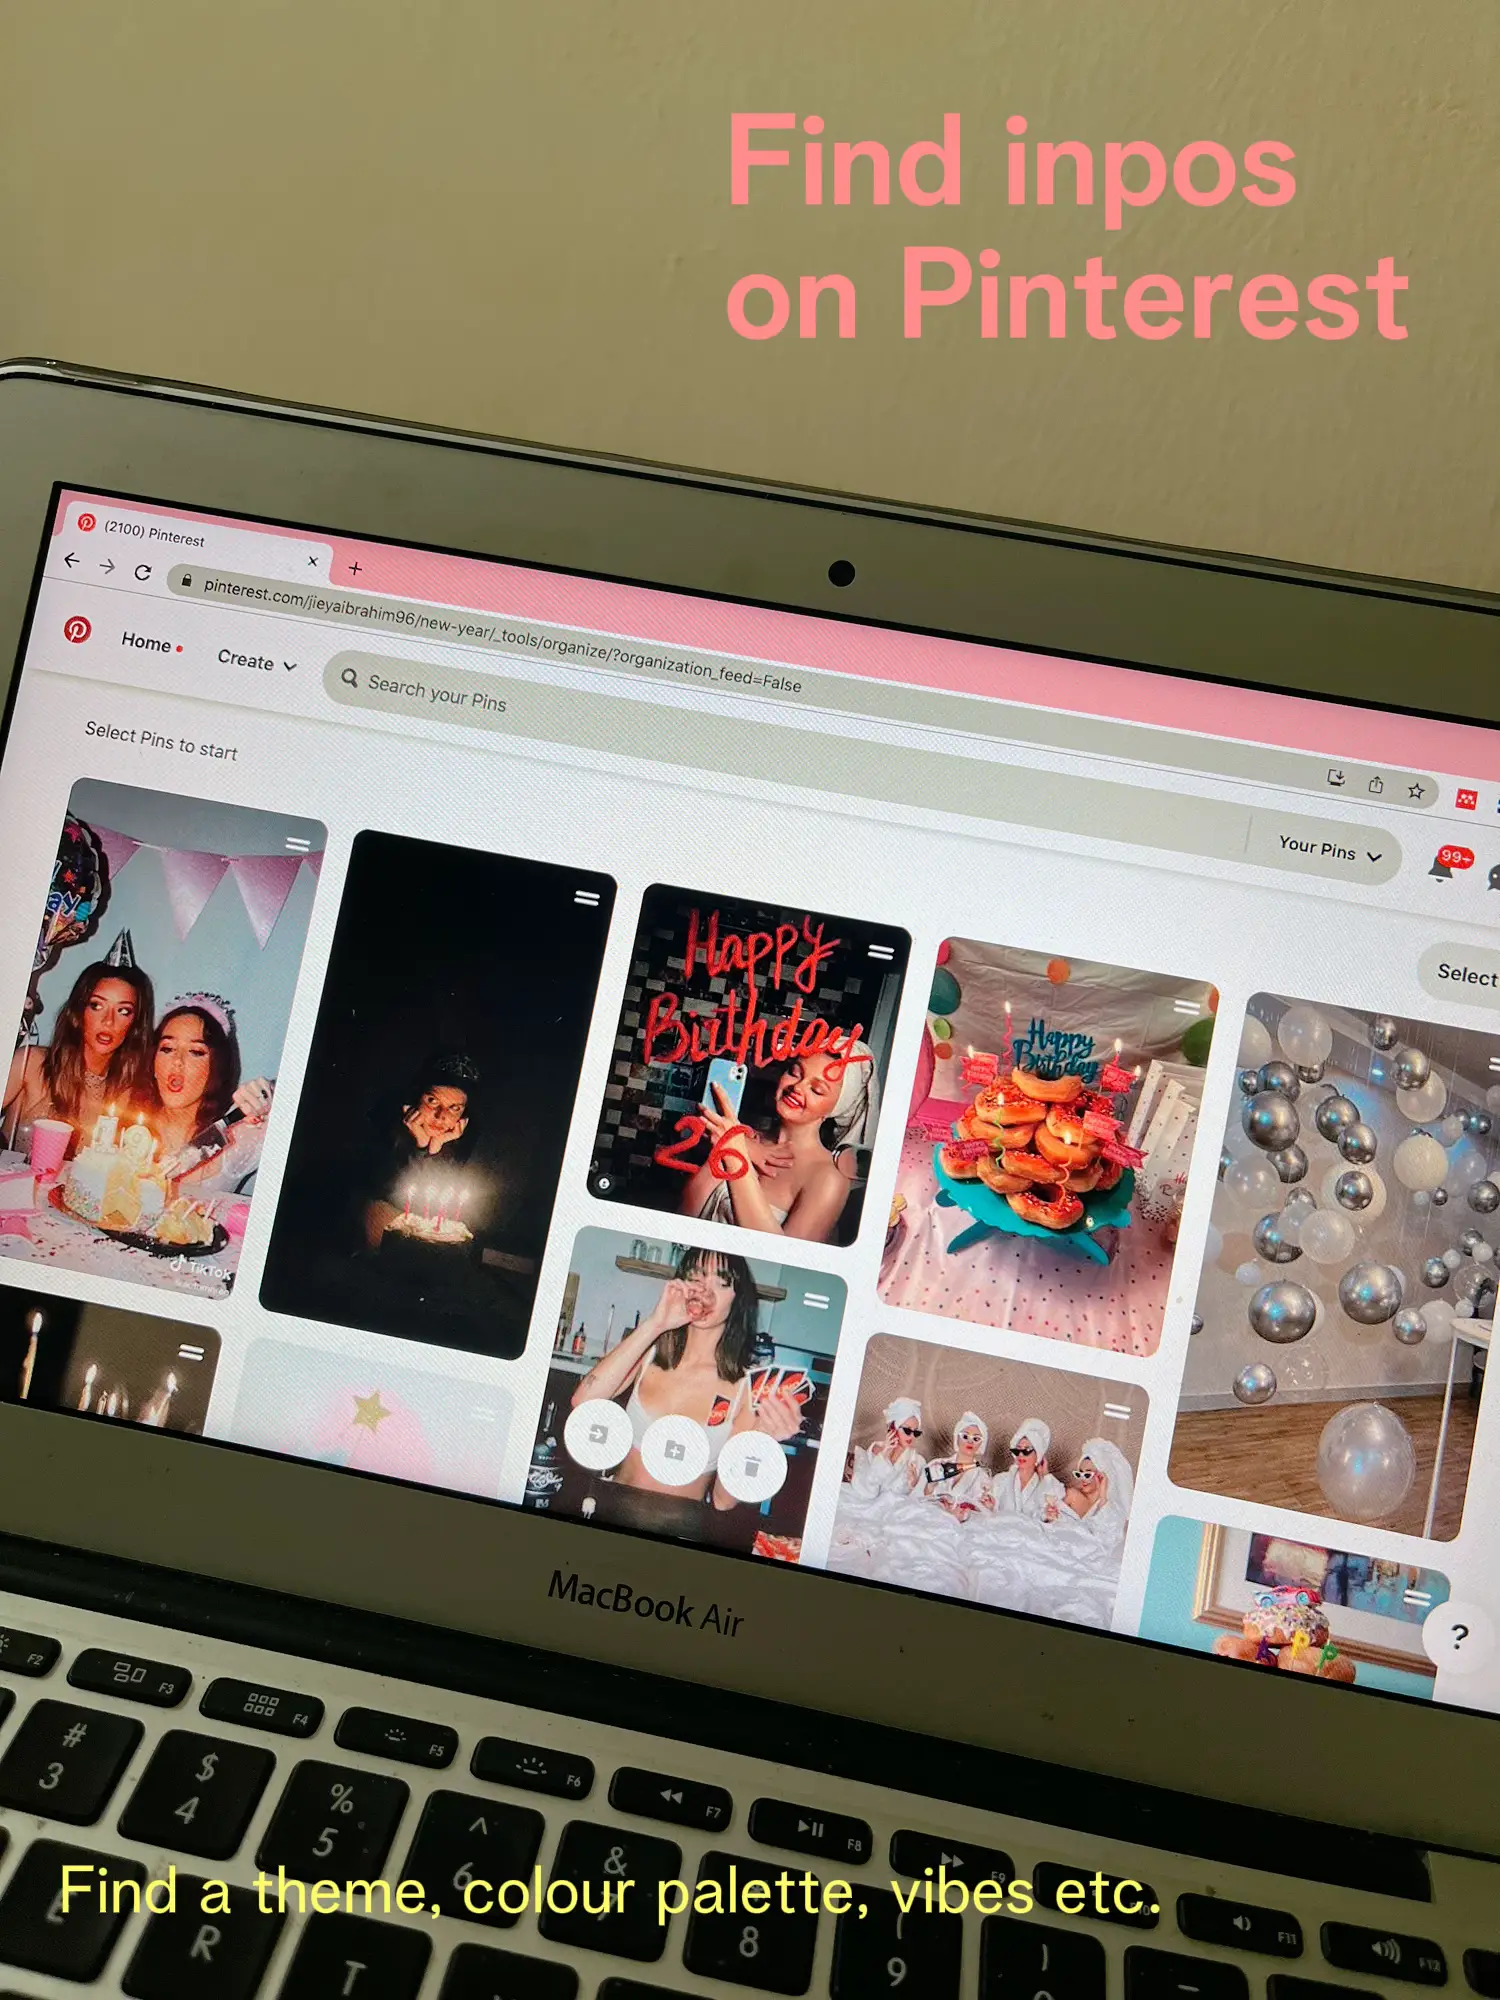 Summer Party Decorations on Pinterest - Pencarian Lemon8